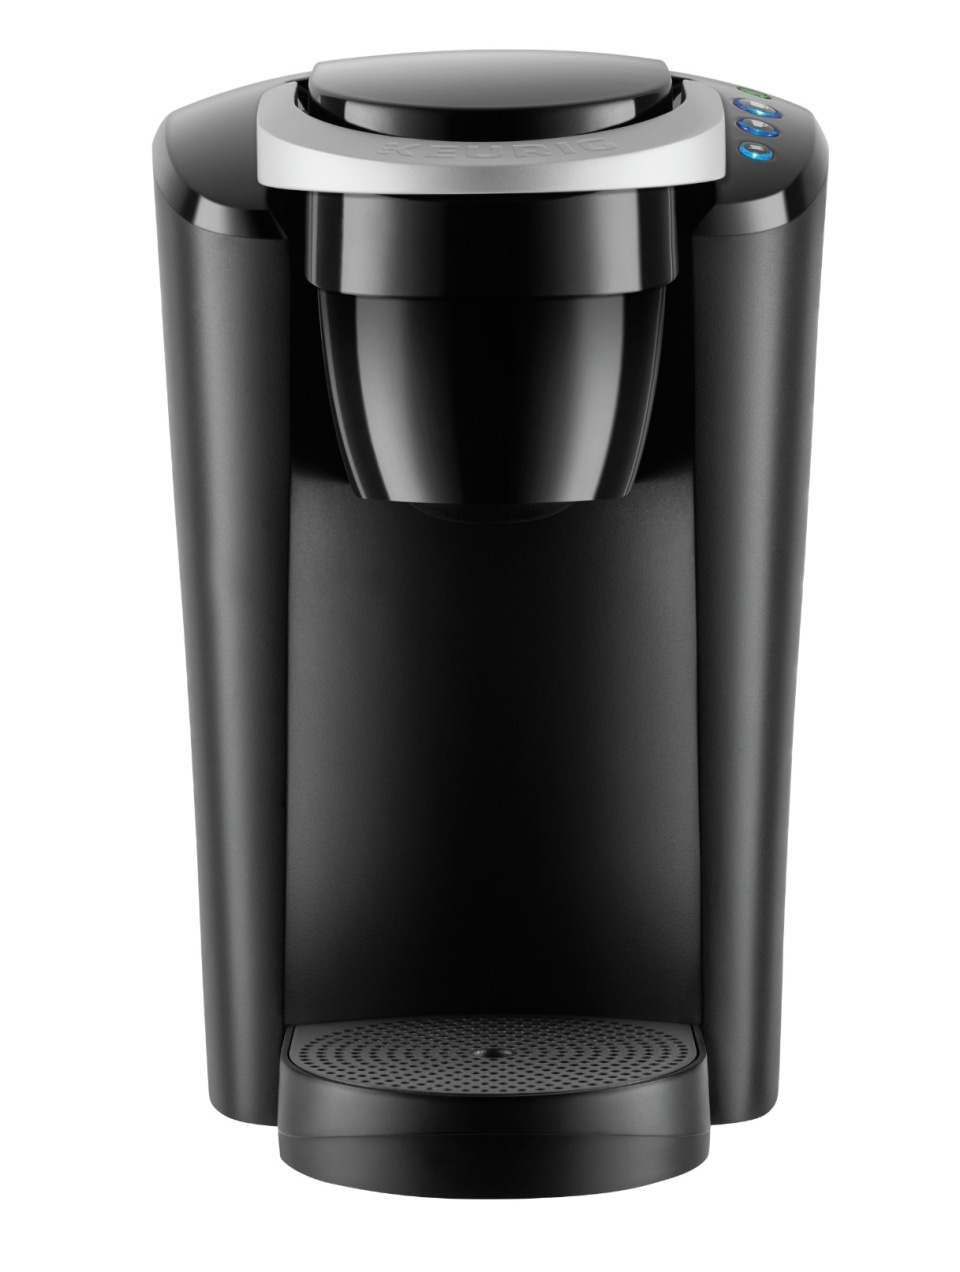 Keurig K-Compact Coffee Maker doorbuster pricing now live at just $39 (Reg.  $67+)